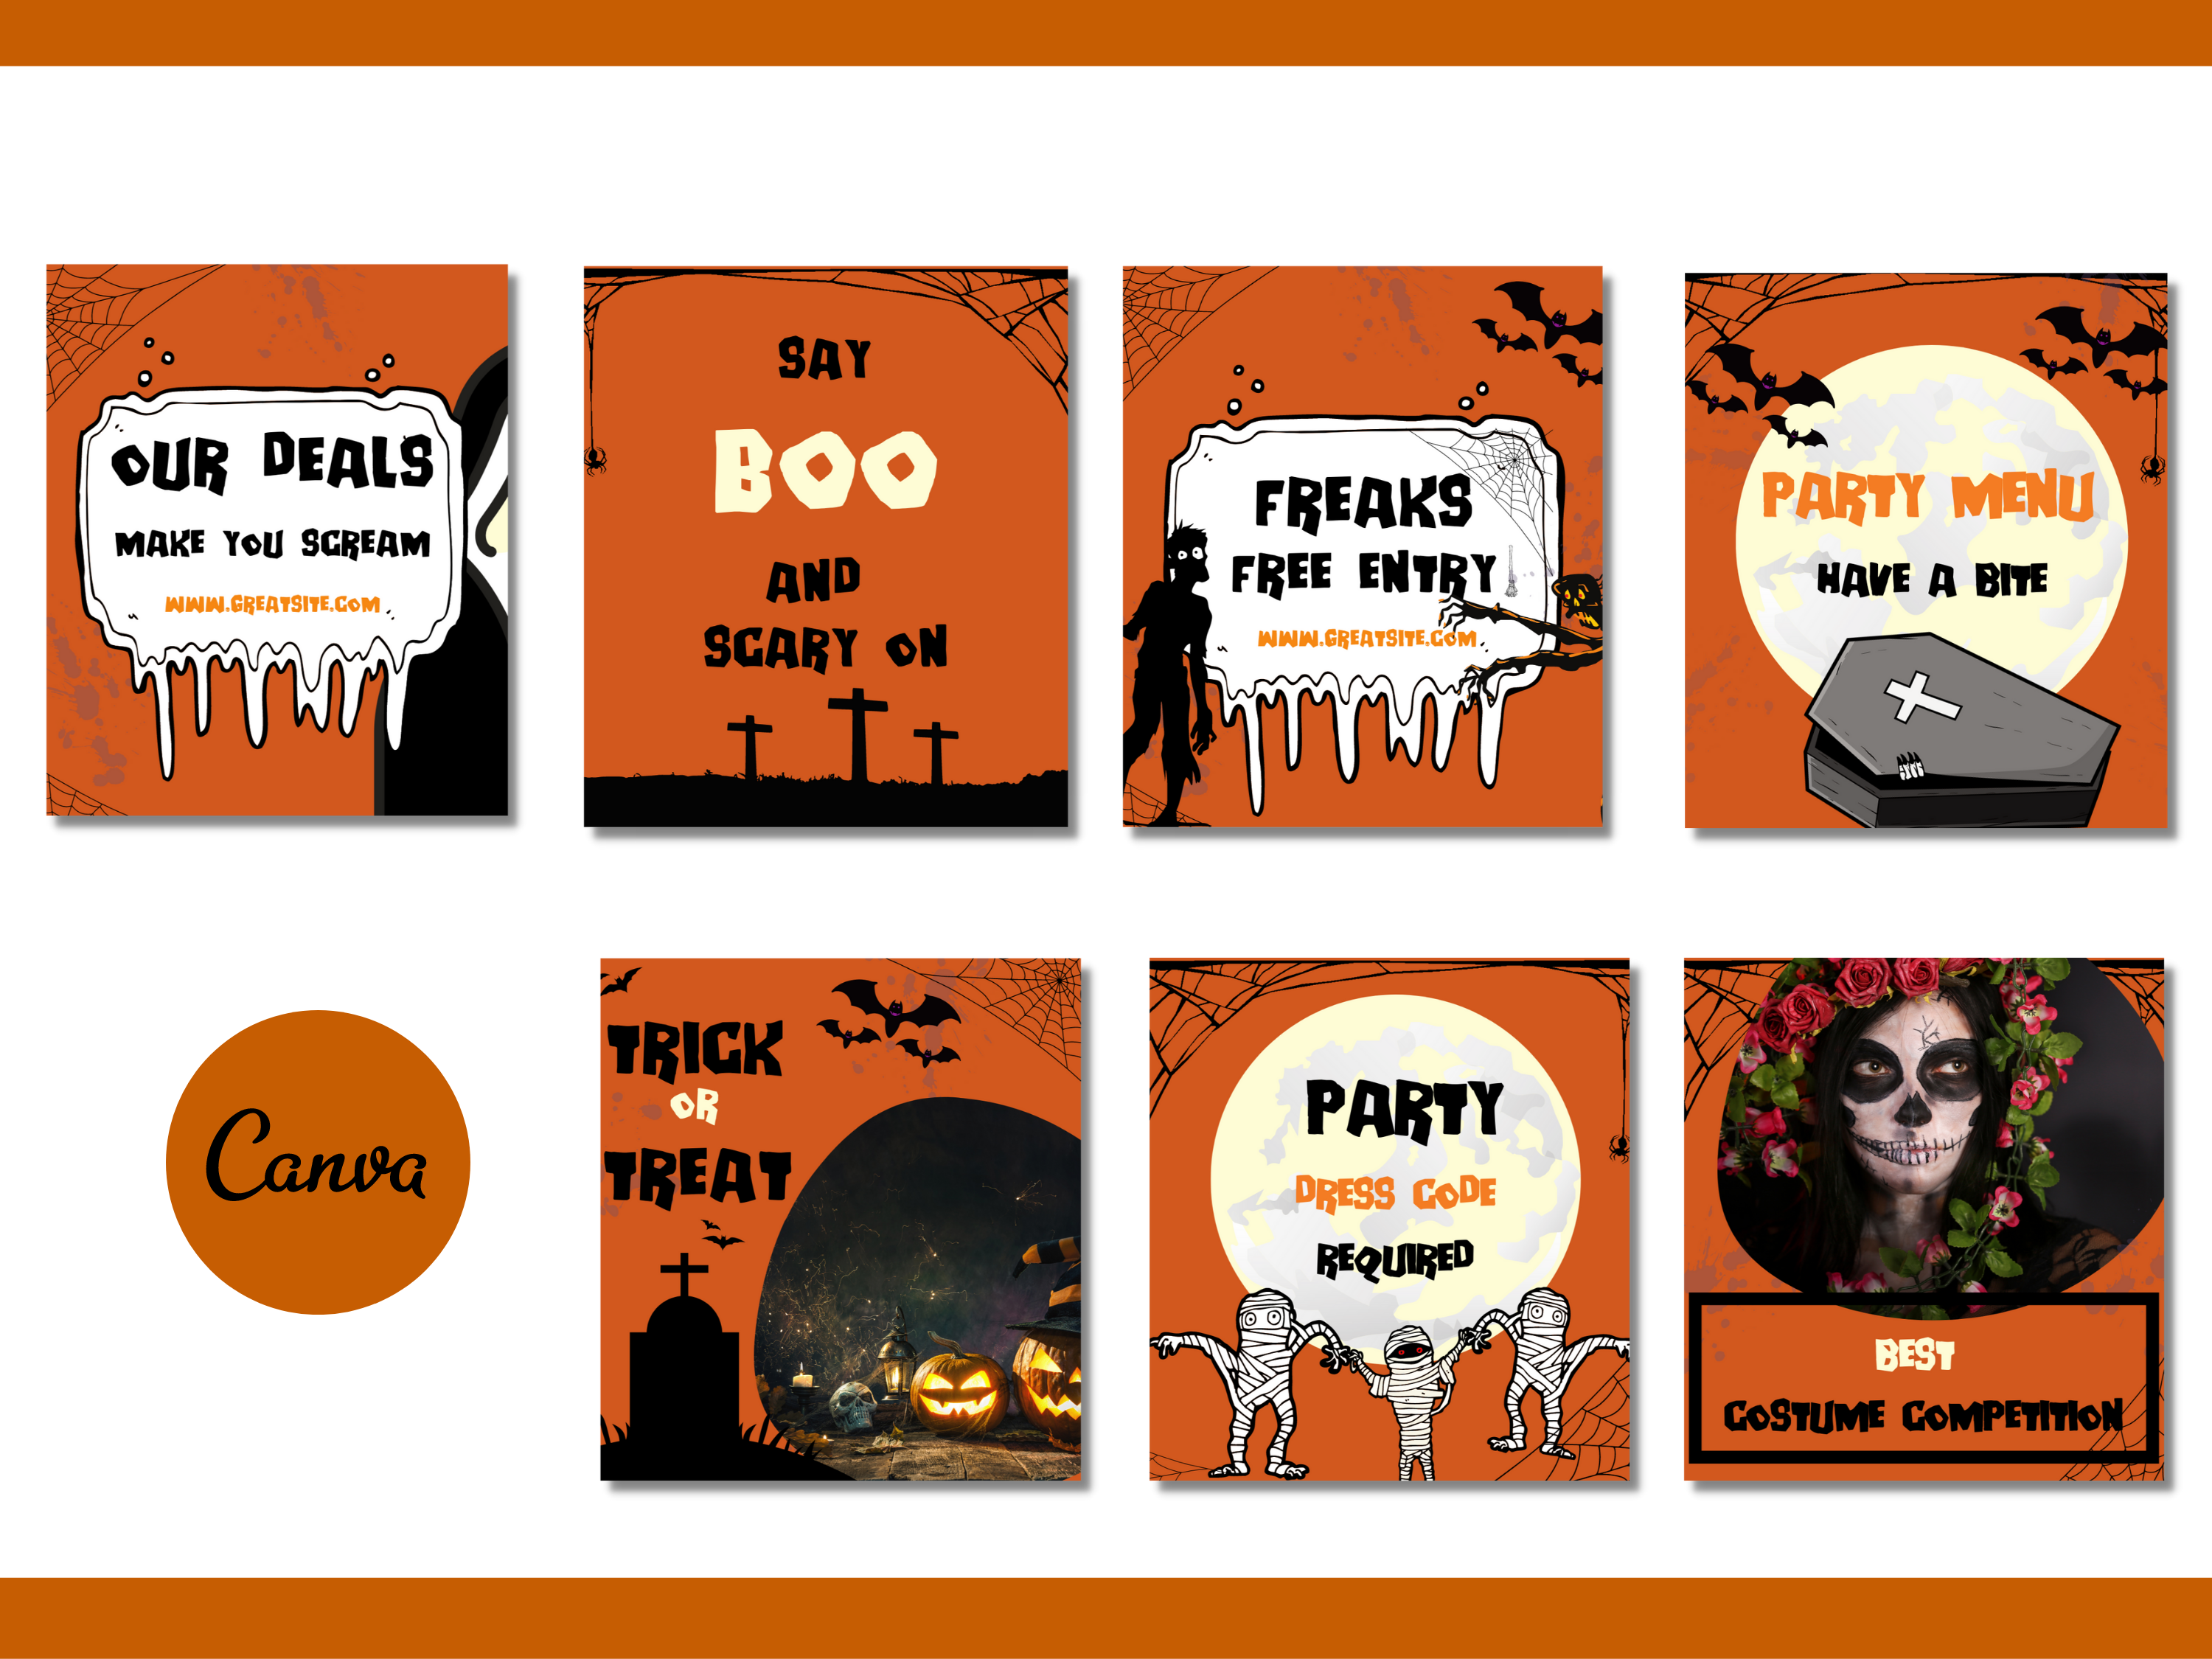 Halloween Posts Templates Bundle Kit